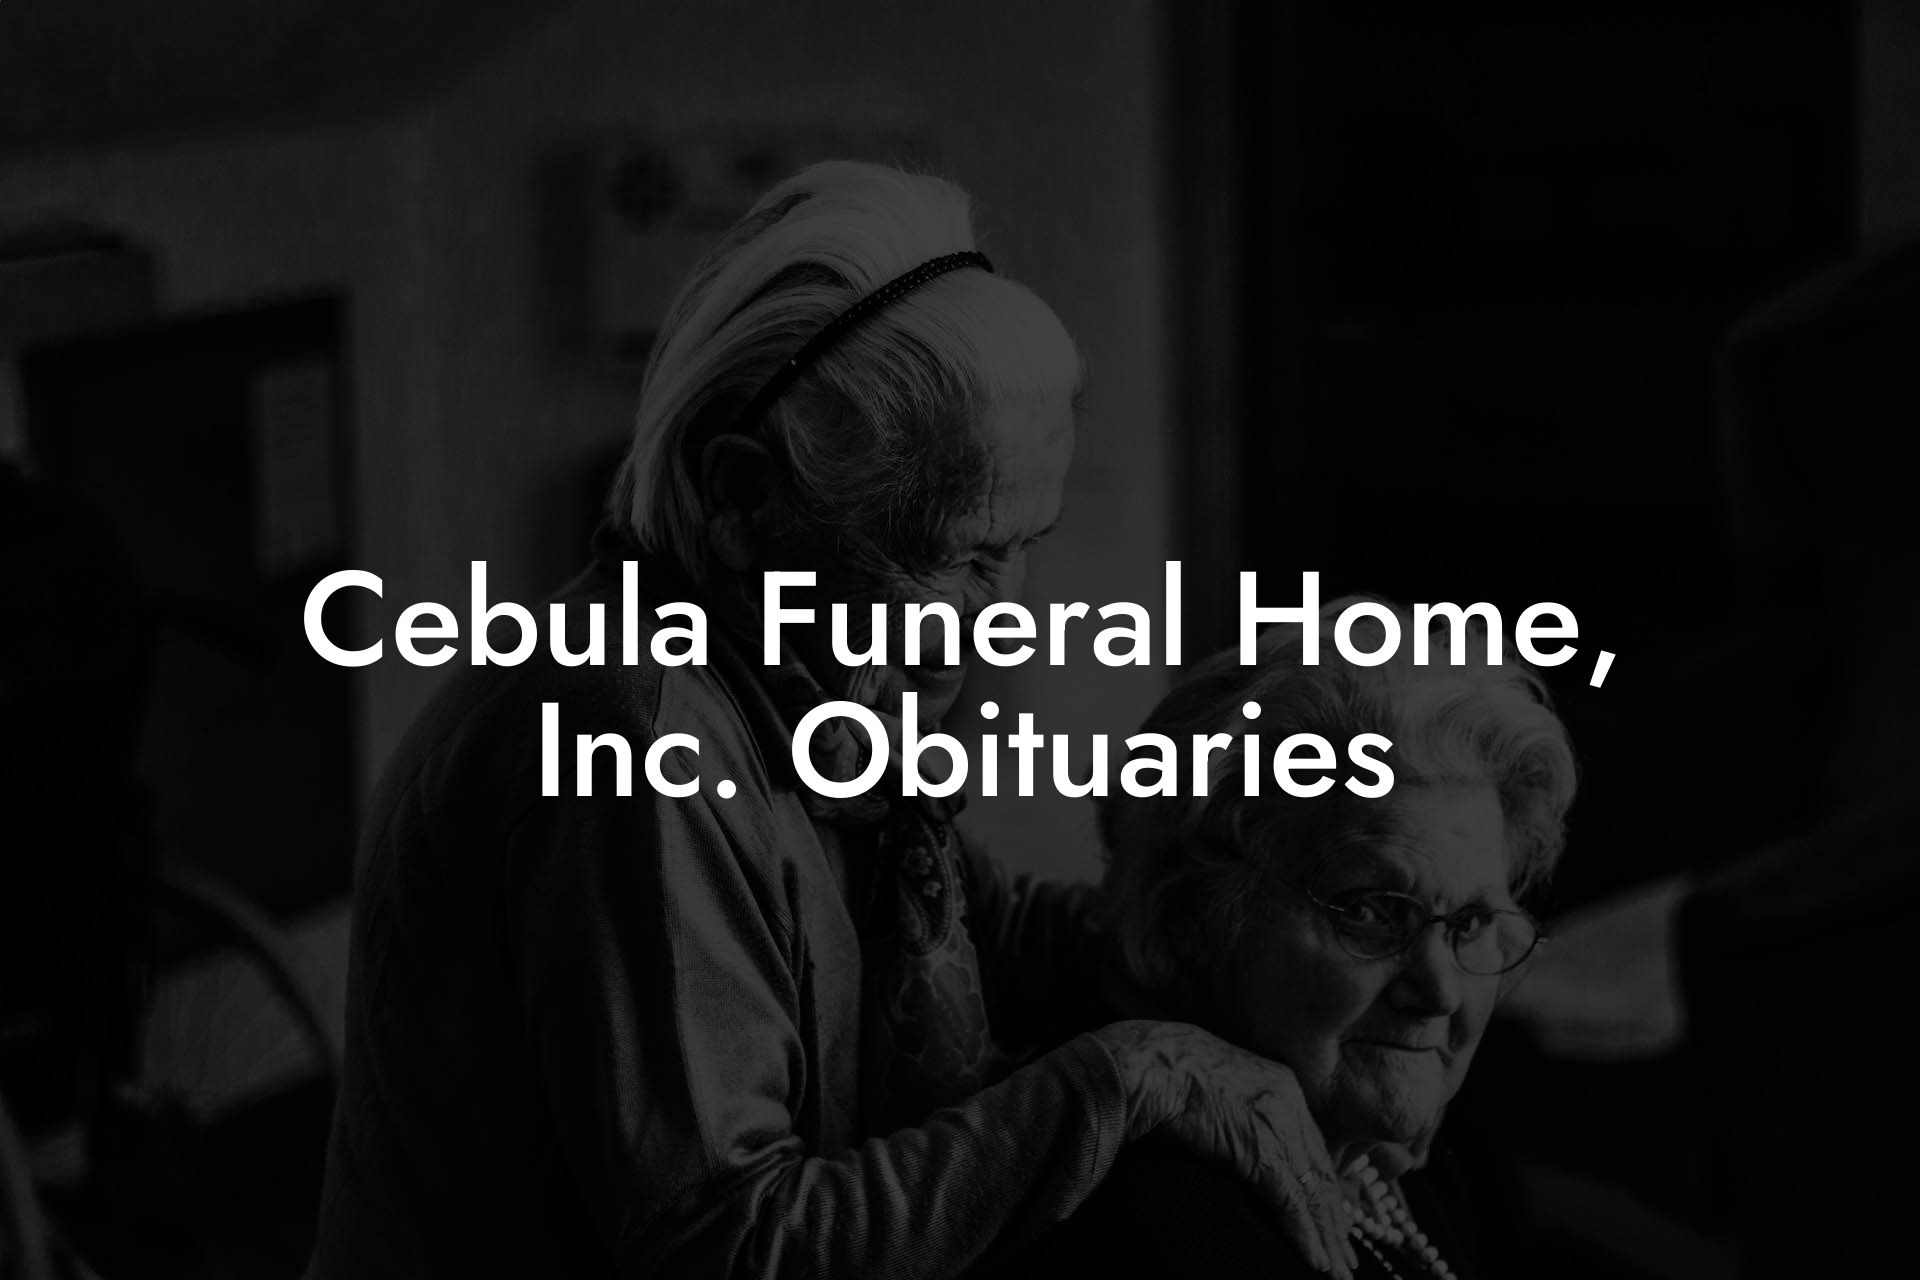 Cebula Funeral Home, Inc. Obituaries